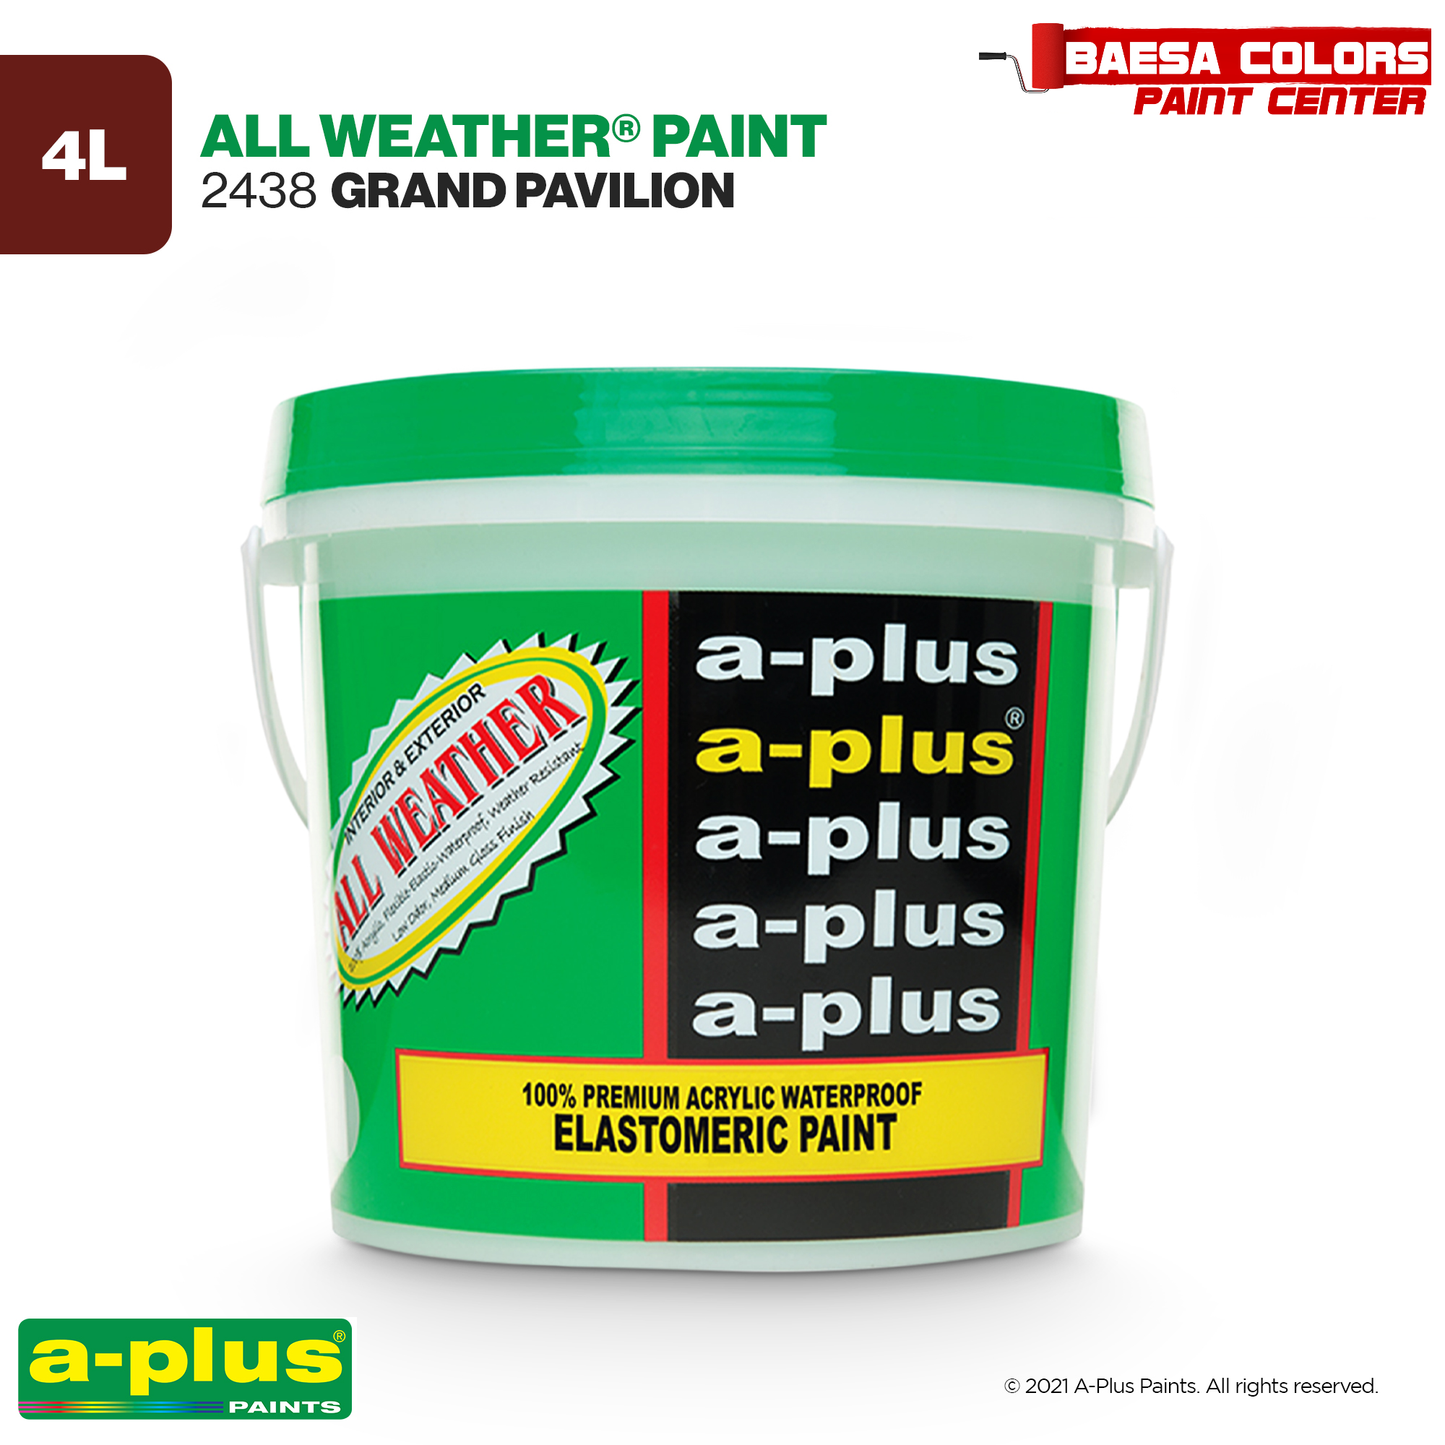 A-Plus All Weather® 2438 Grand Pavillion Elastomeric Paint